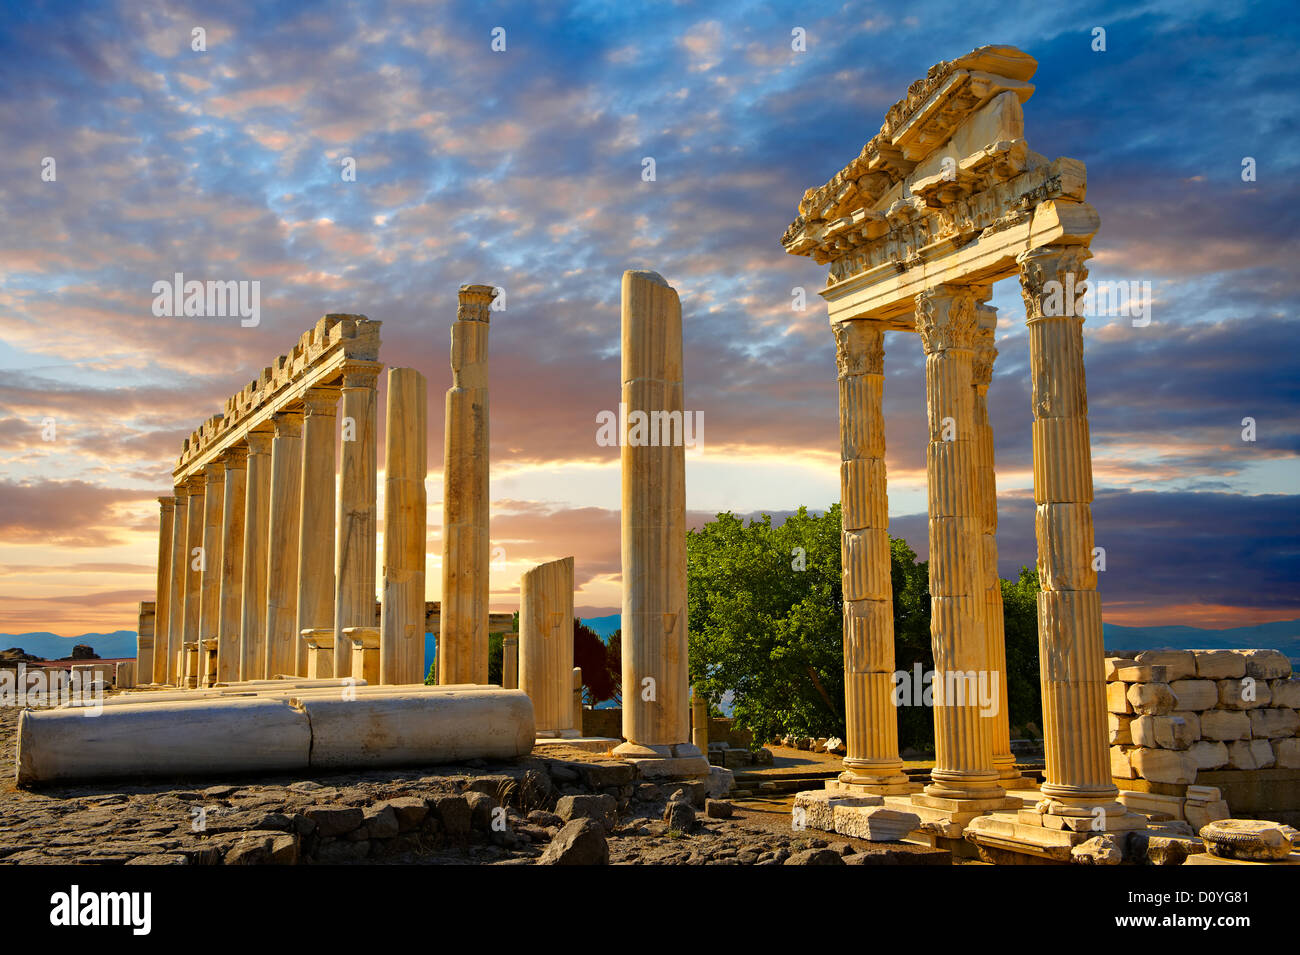 Pillars of the Greco - Roman Temple of Trajan, Pergamum archaeological site Stock Photo